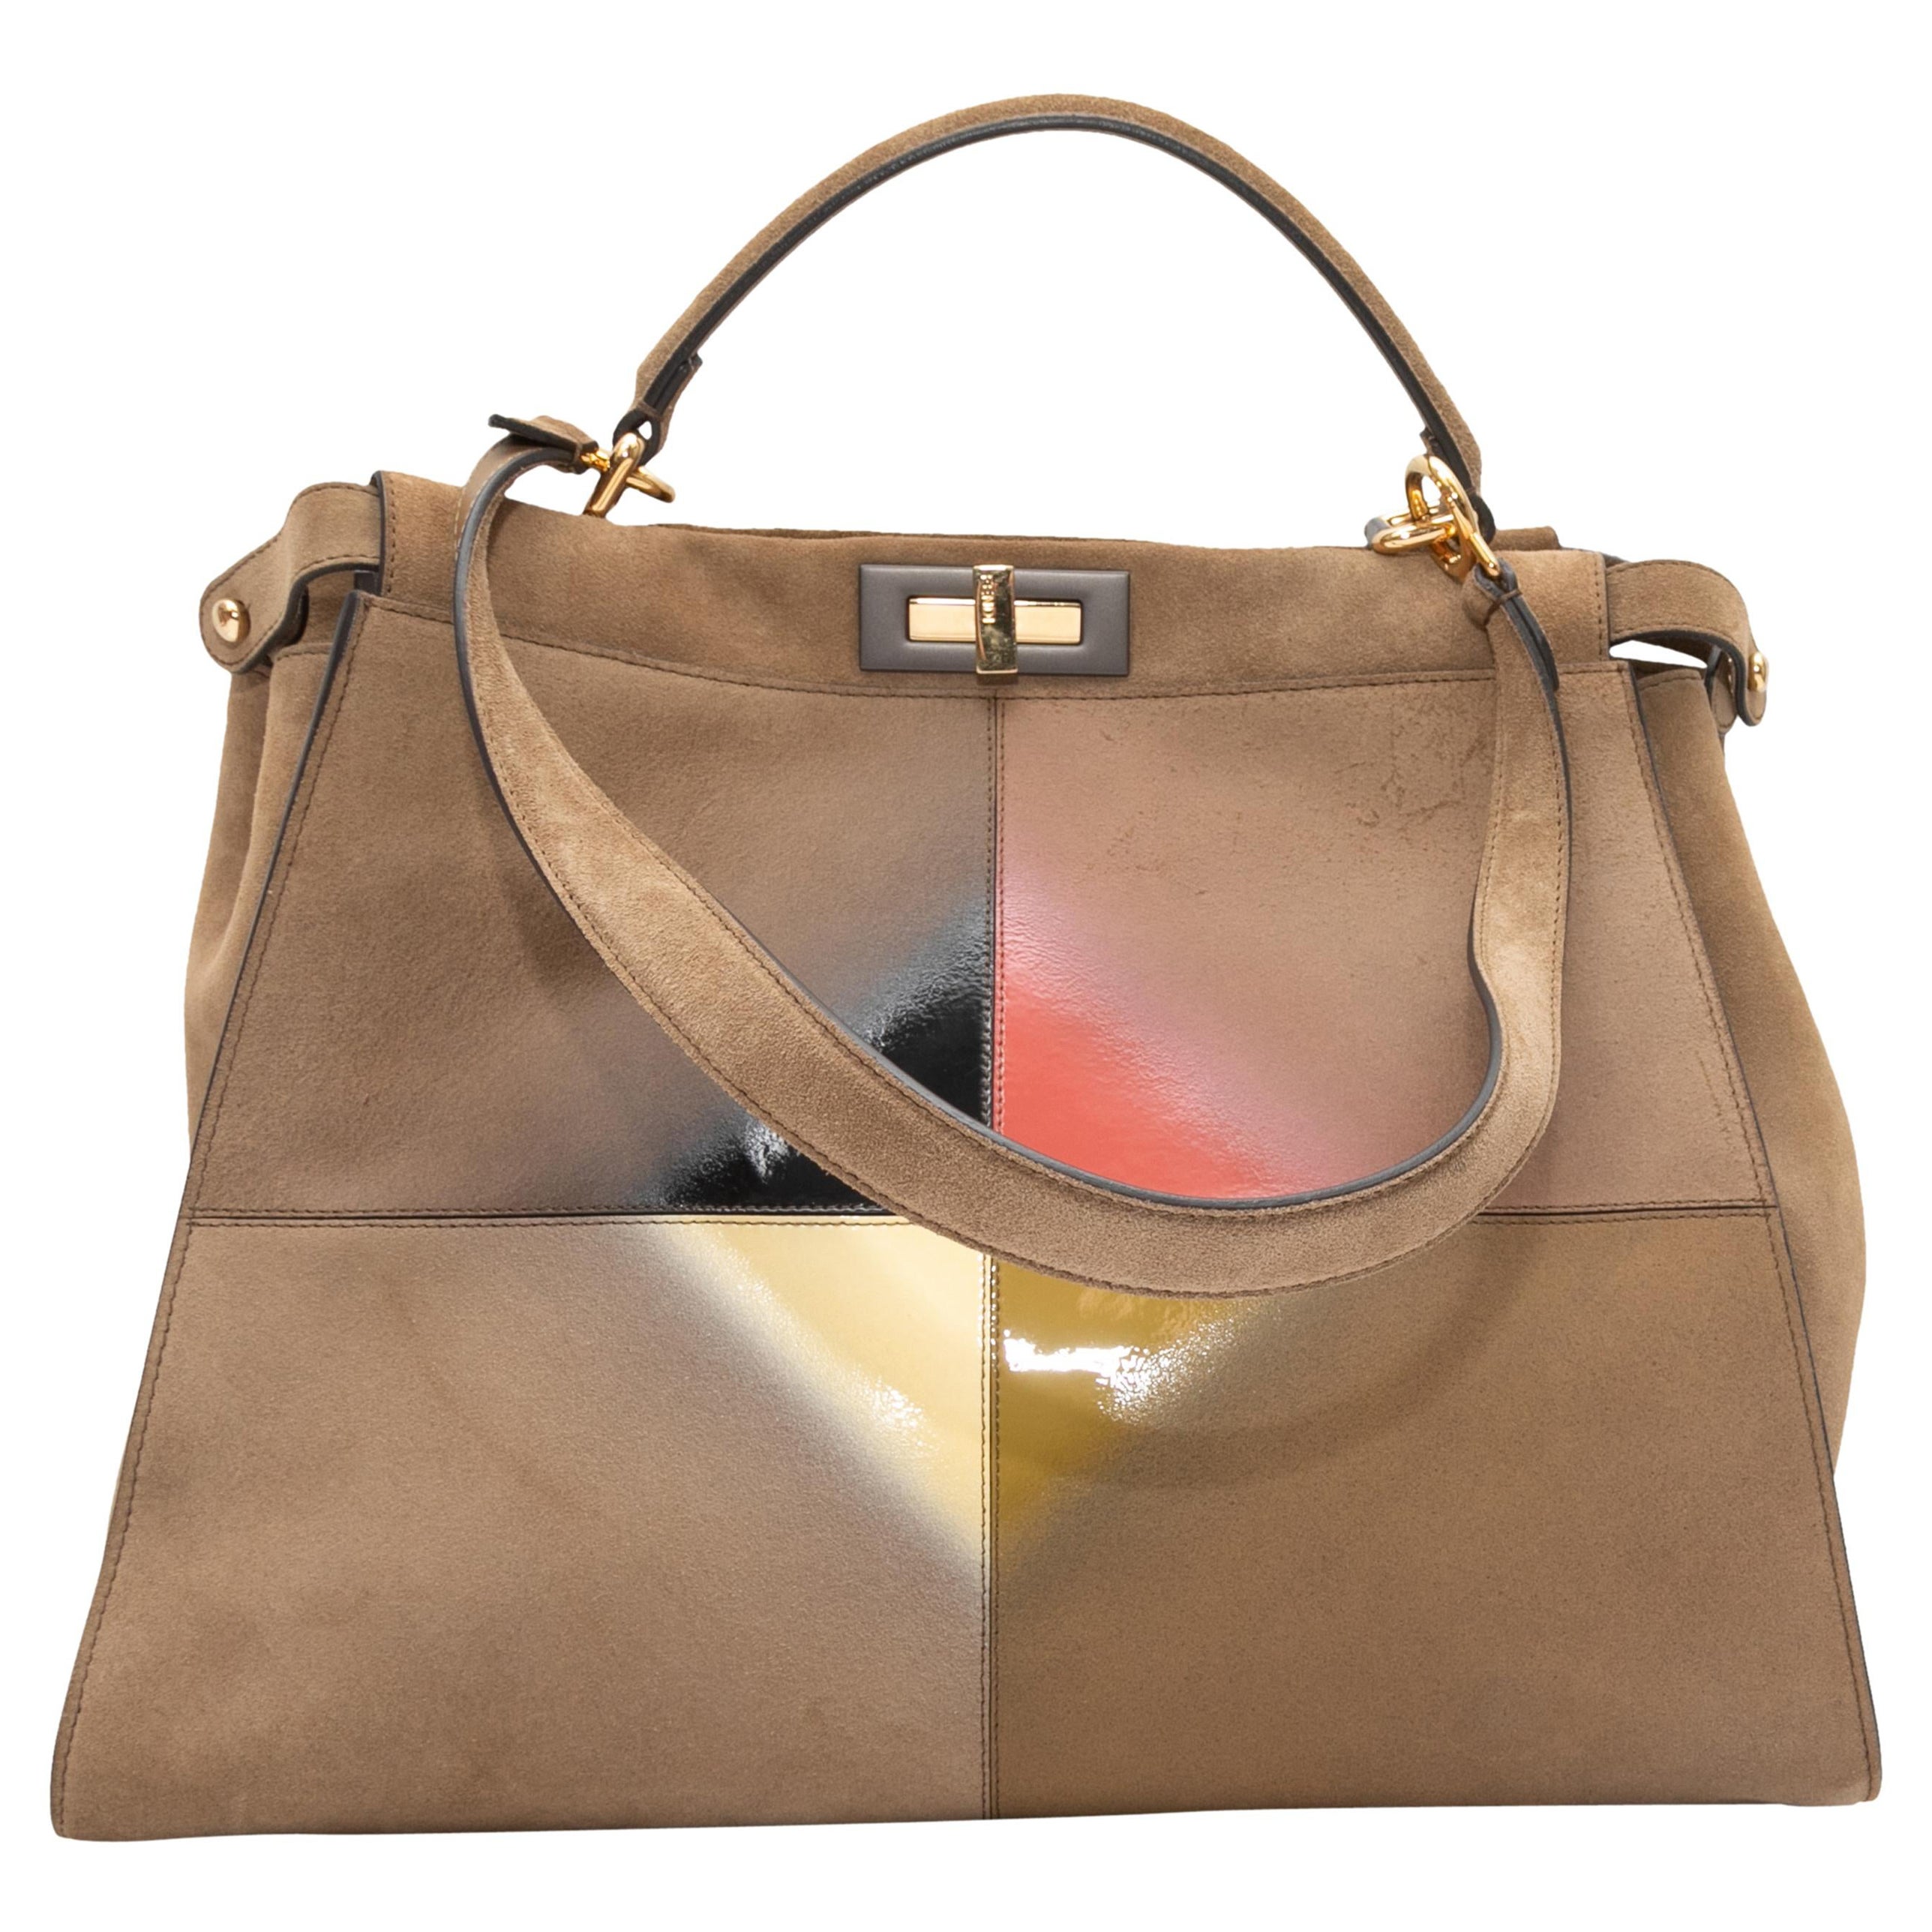 Tan & Multicolor Fendi Peekaboo Painted Handbag For Sale